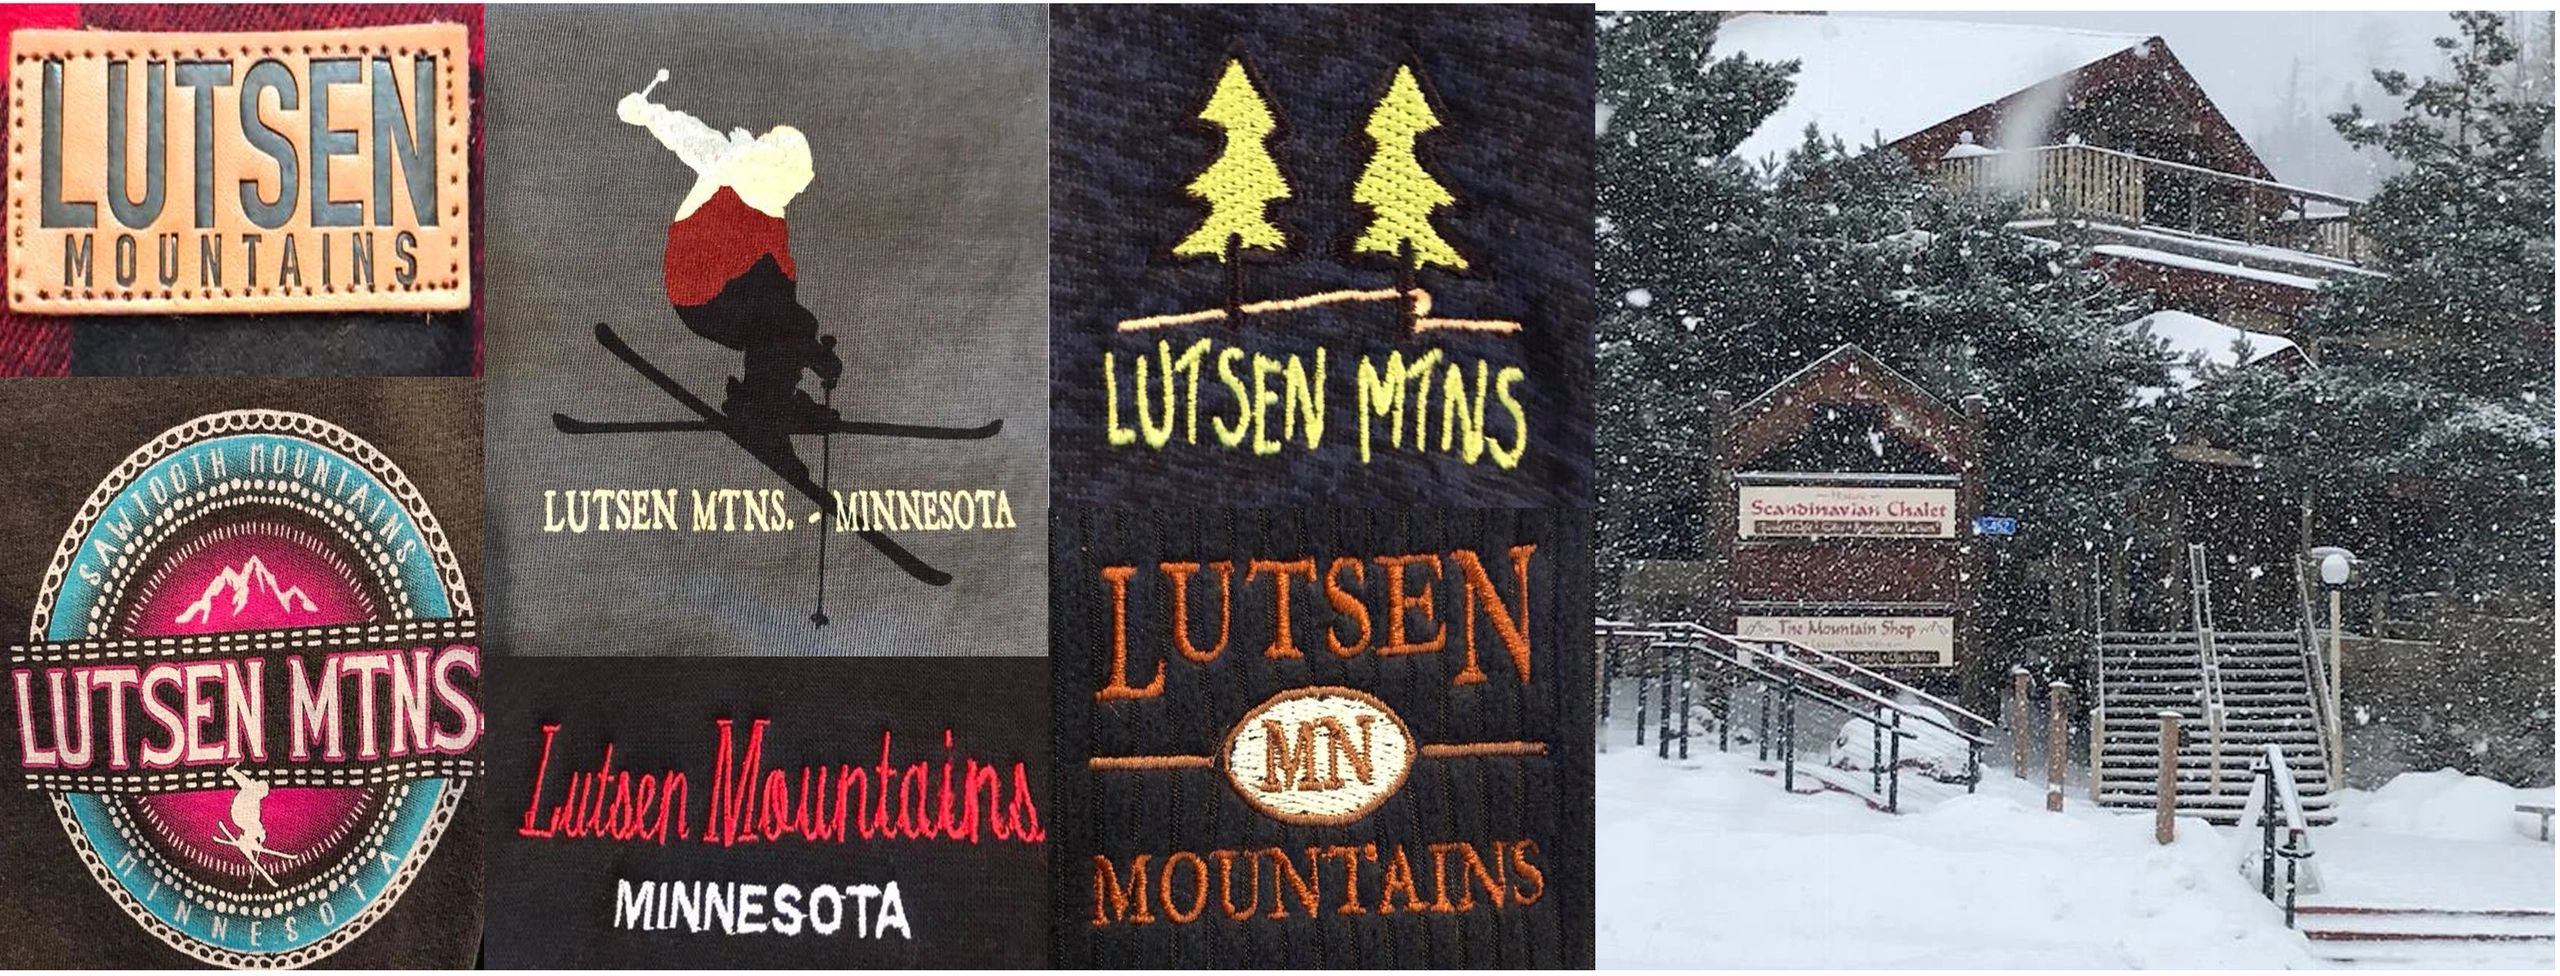 The Mountains Shop at Lutsen Mountains, Gift Shop, unique ski apparel, Lutsen Minnesota